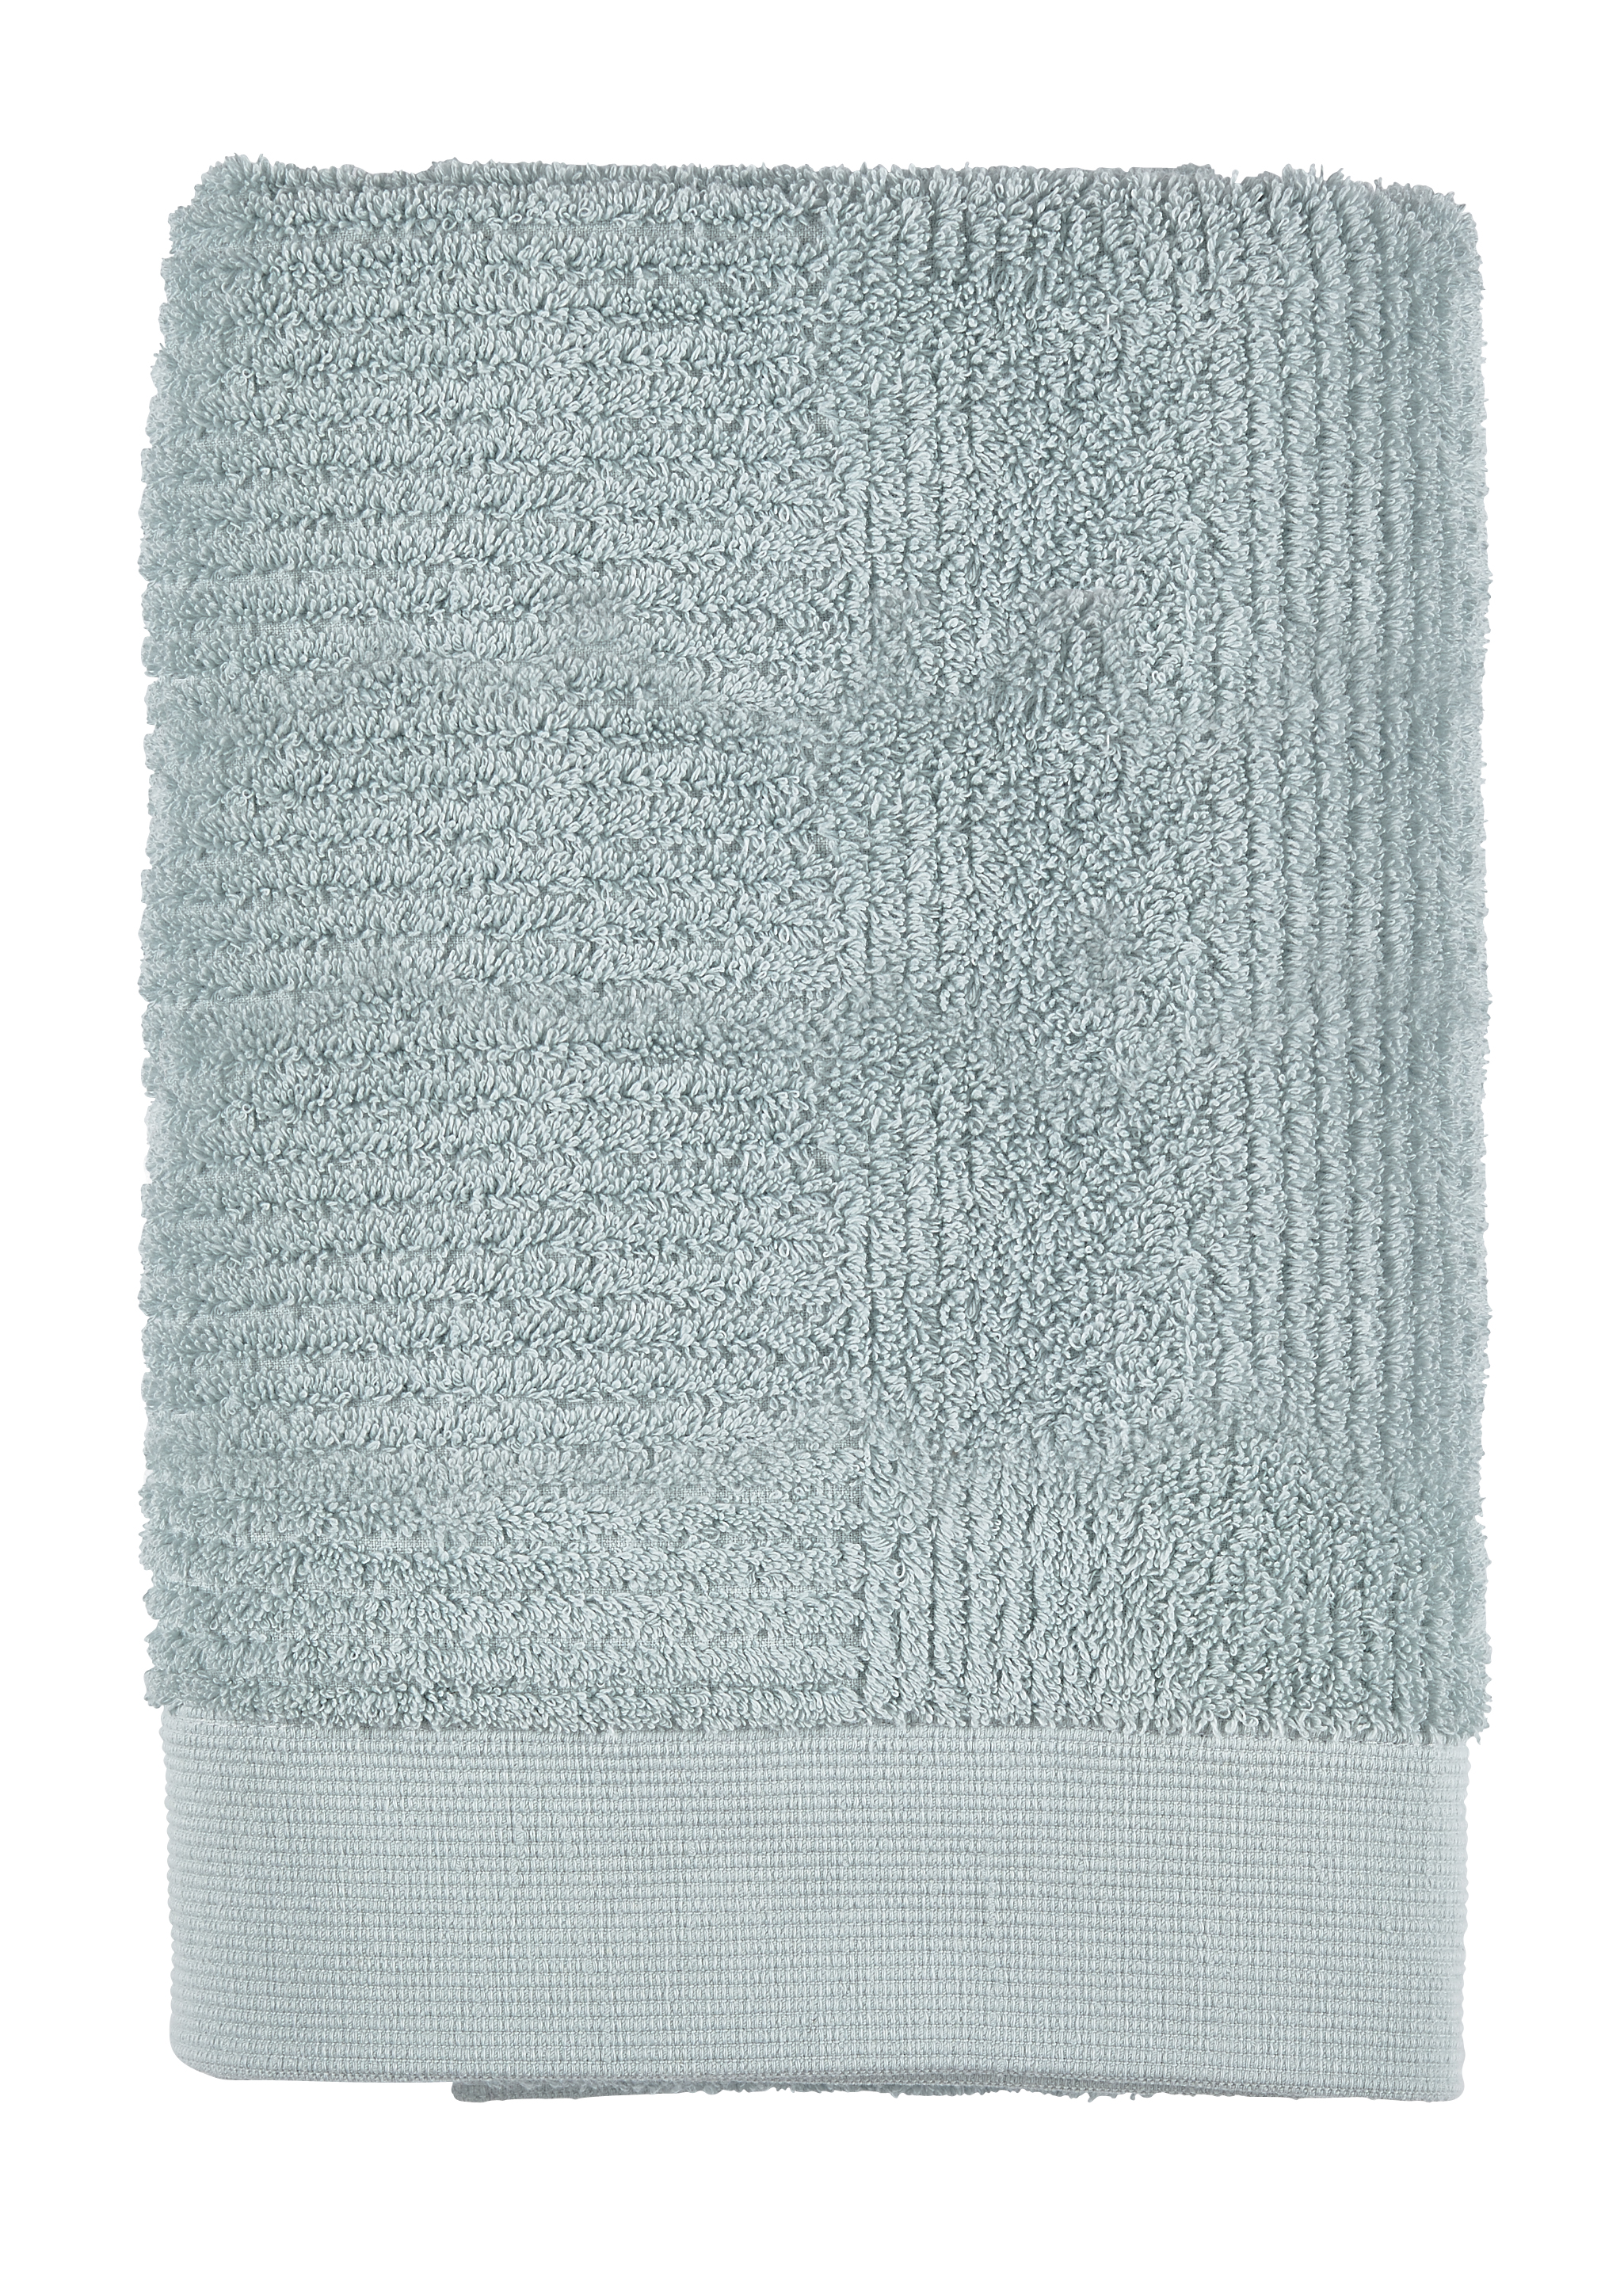 Полотенце classic. Полотенце Dust. Acord Towel for Dust.